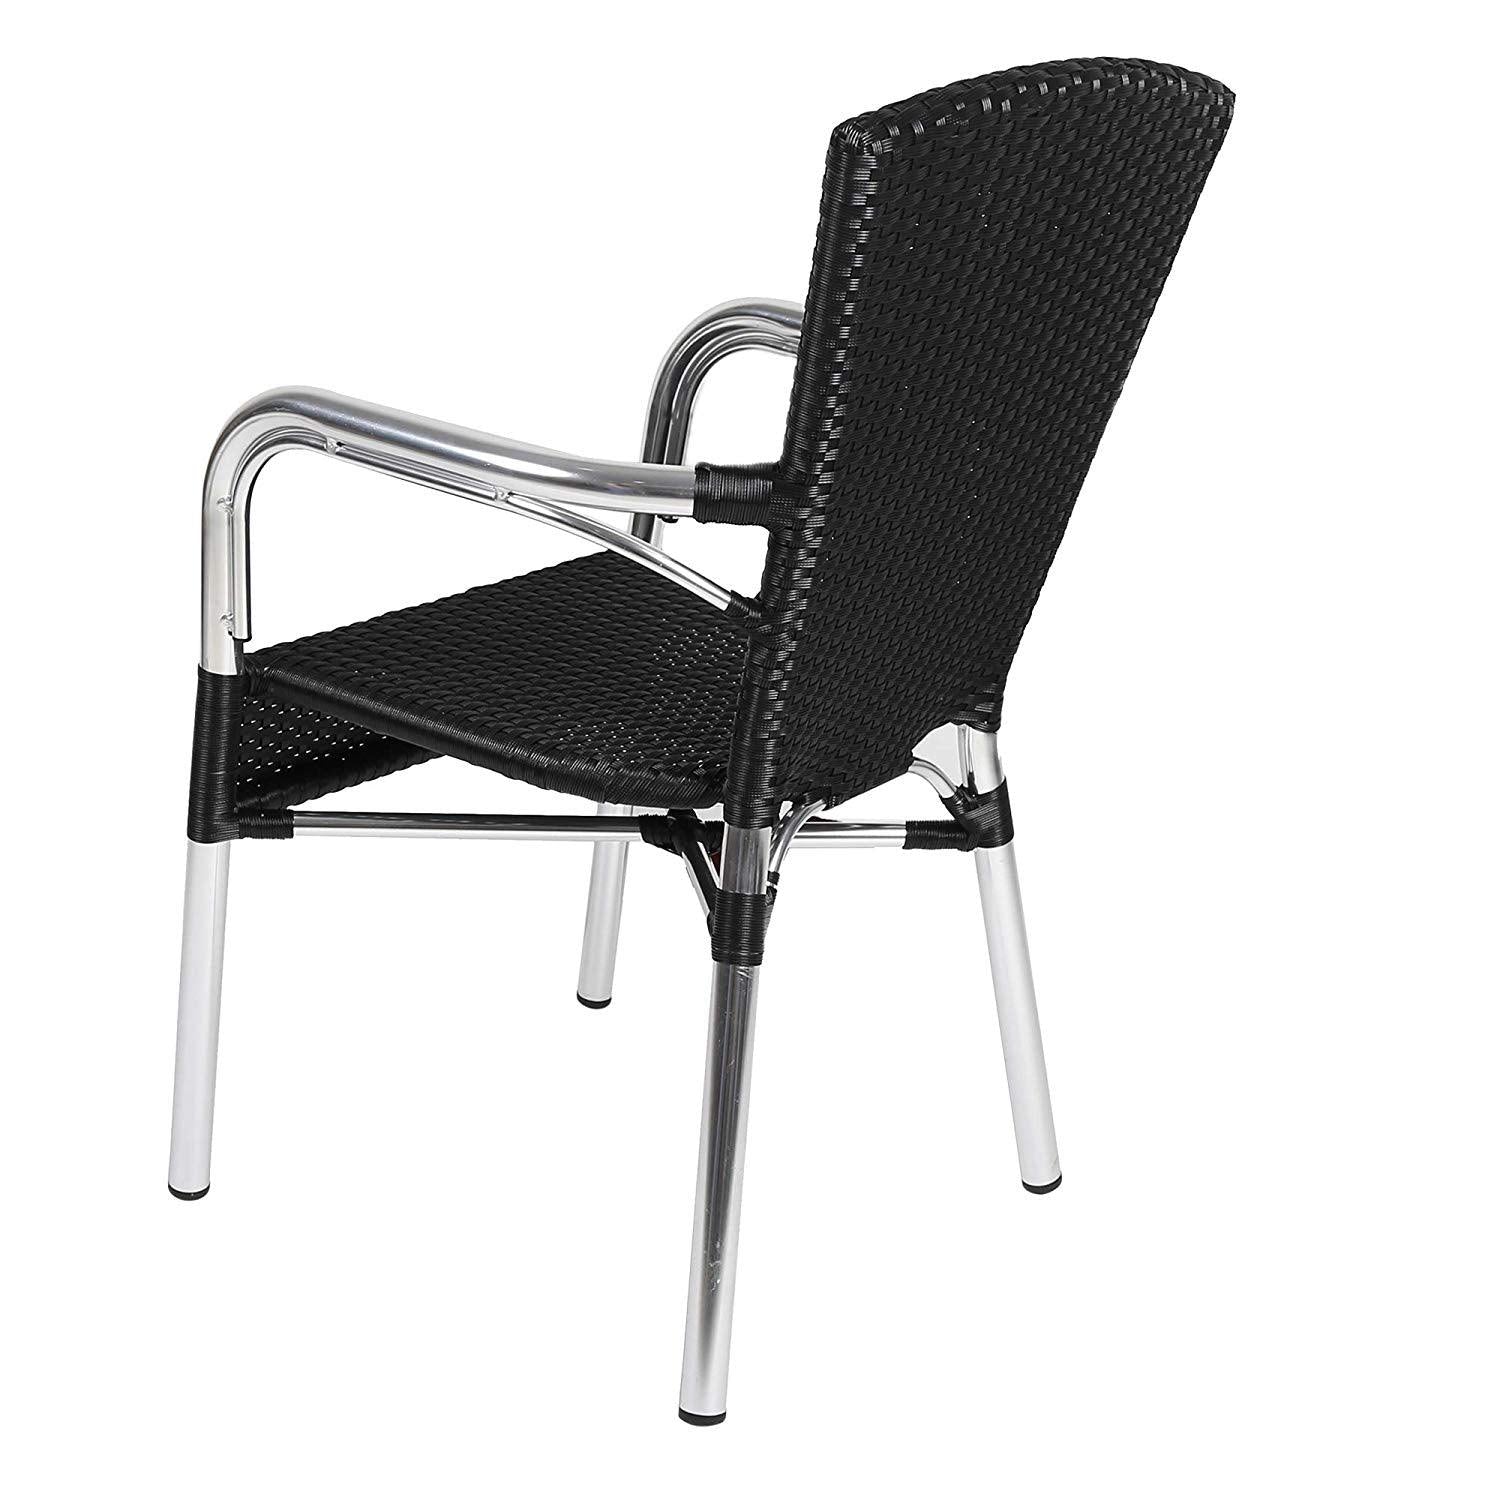 Bosonshop 4 Piece Patio Rattan Wicker Chair, Indoor Outdoor Use Garden Lawn Backyard Stack Chair, Balck